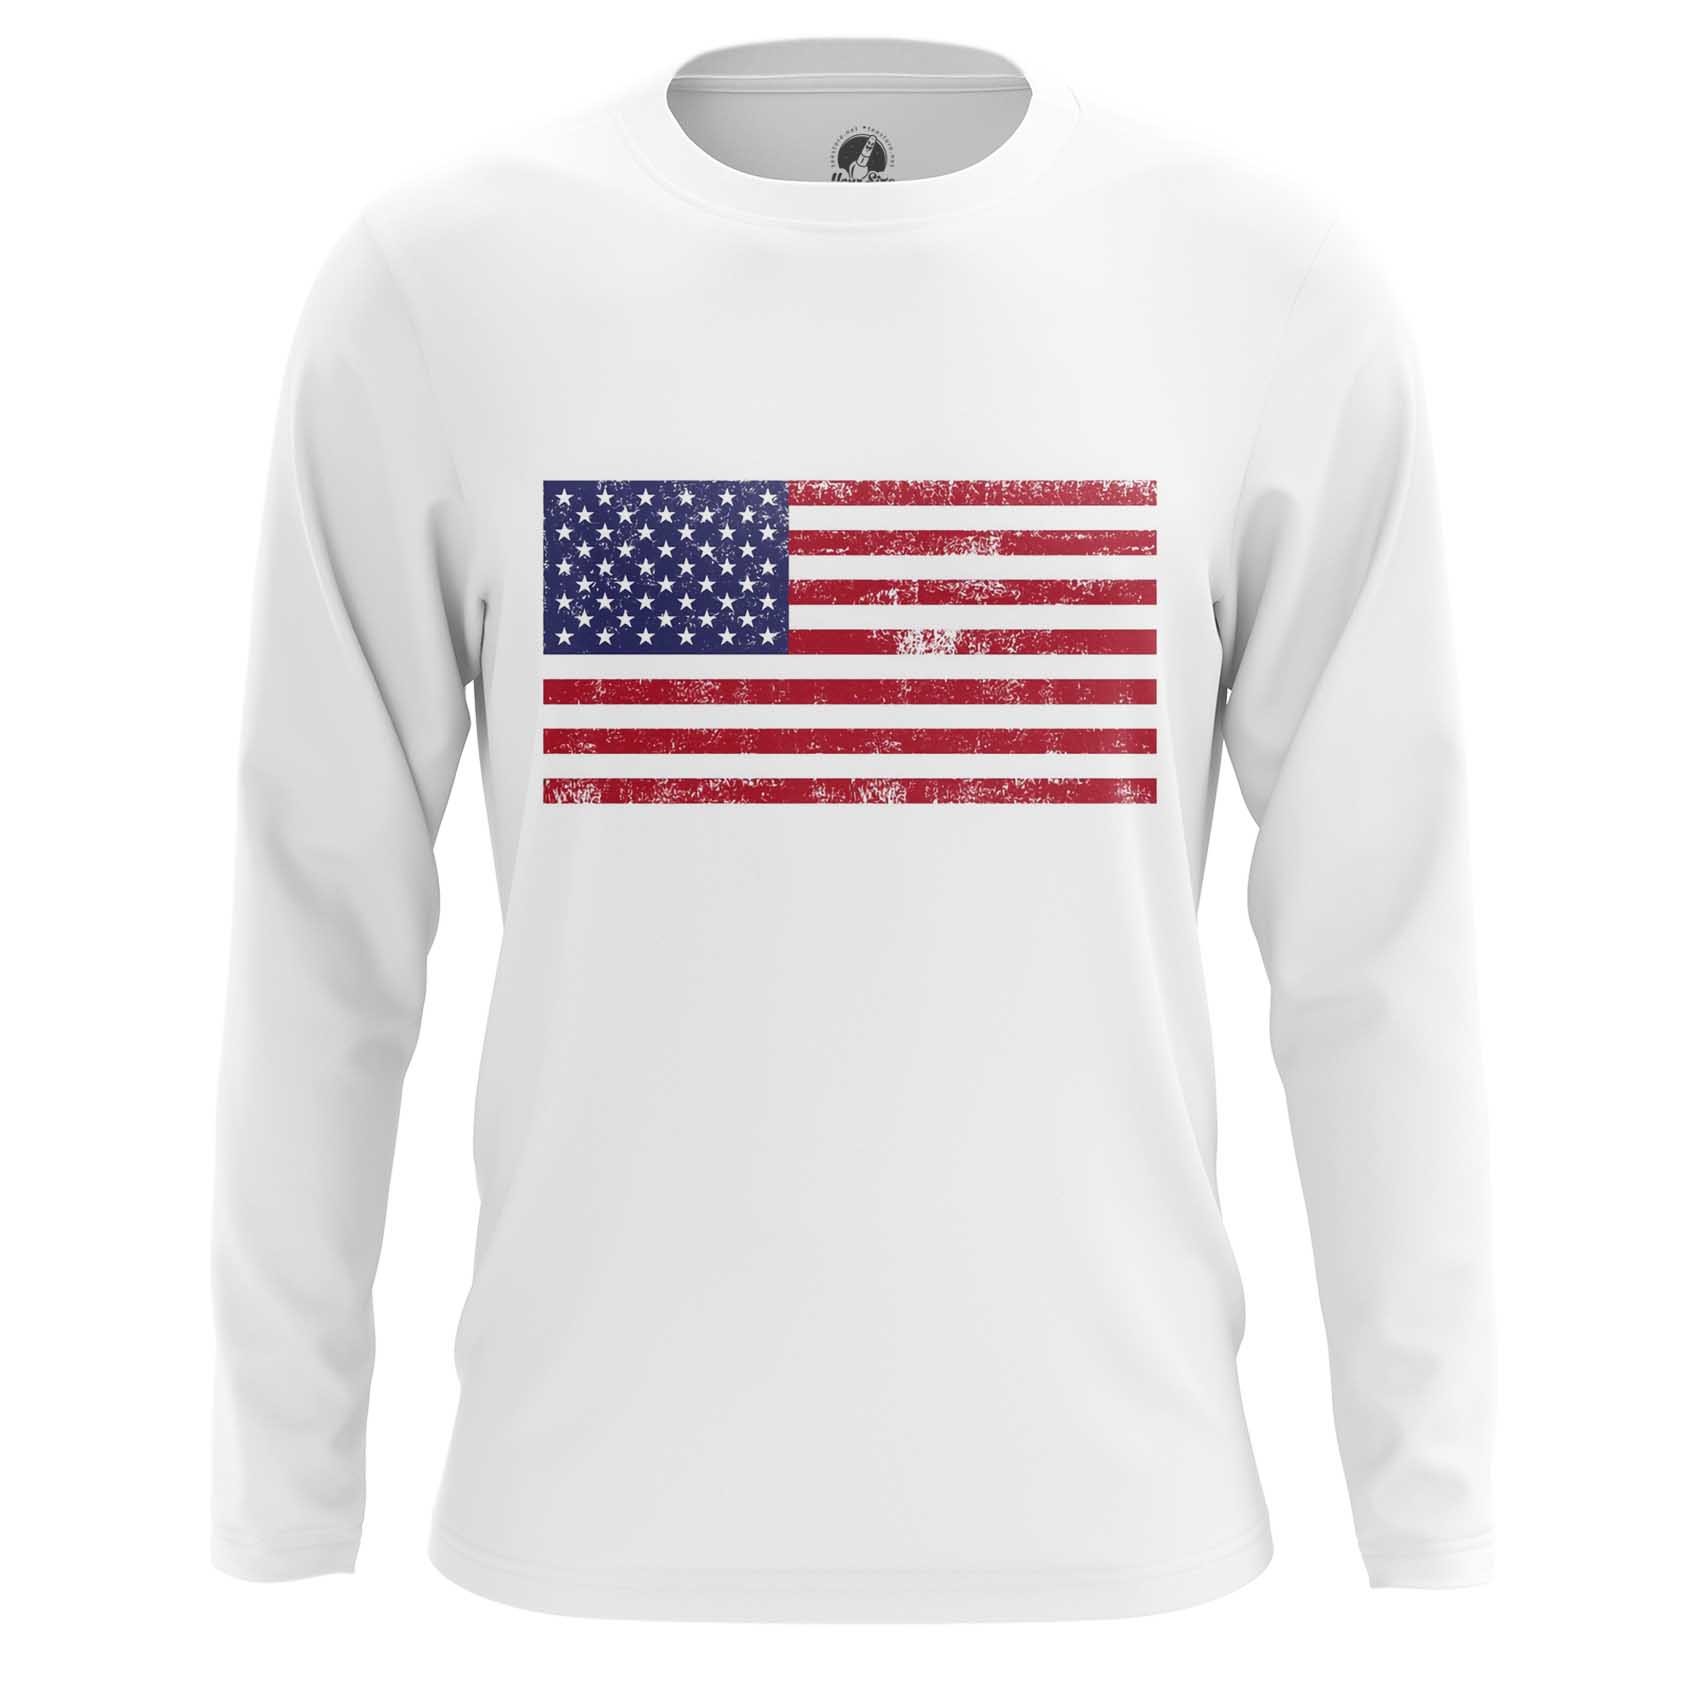 Купить футболки флагами. Футболка флаг США. Одежда с флагом США. Футболка с американским флагом. Футболка с флагом США мужская.